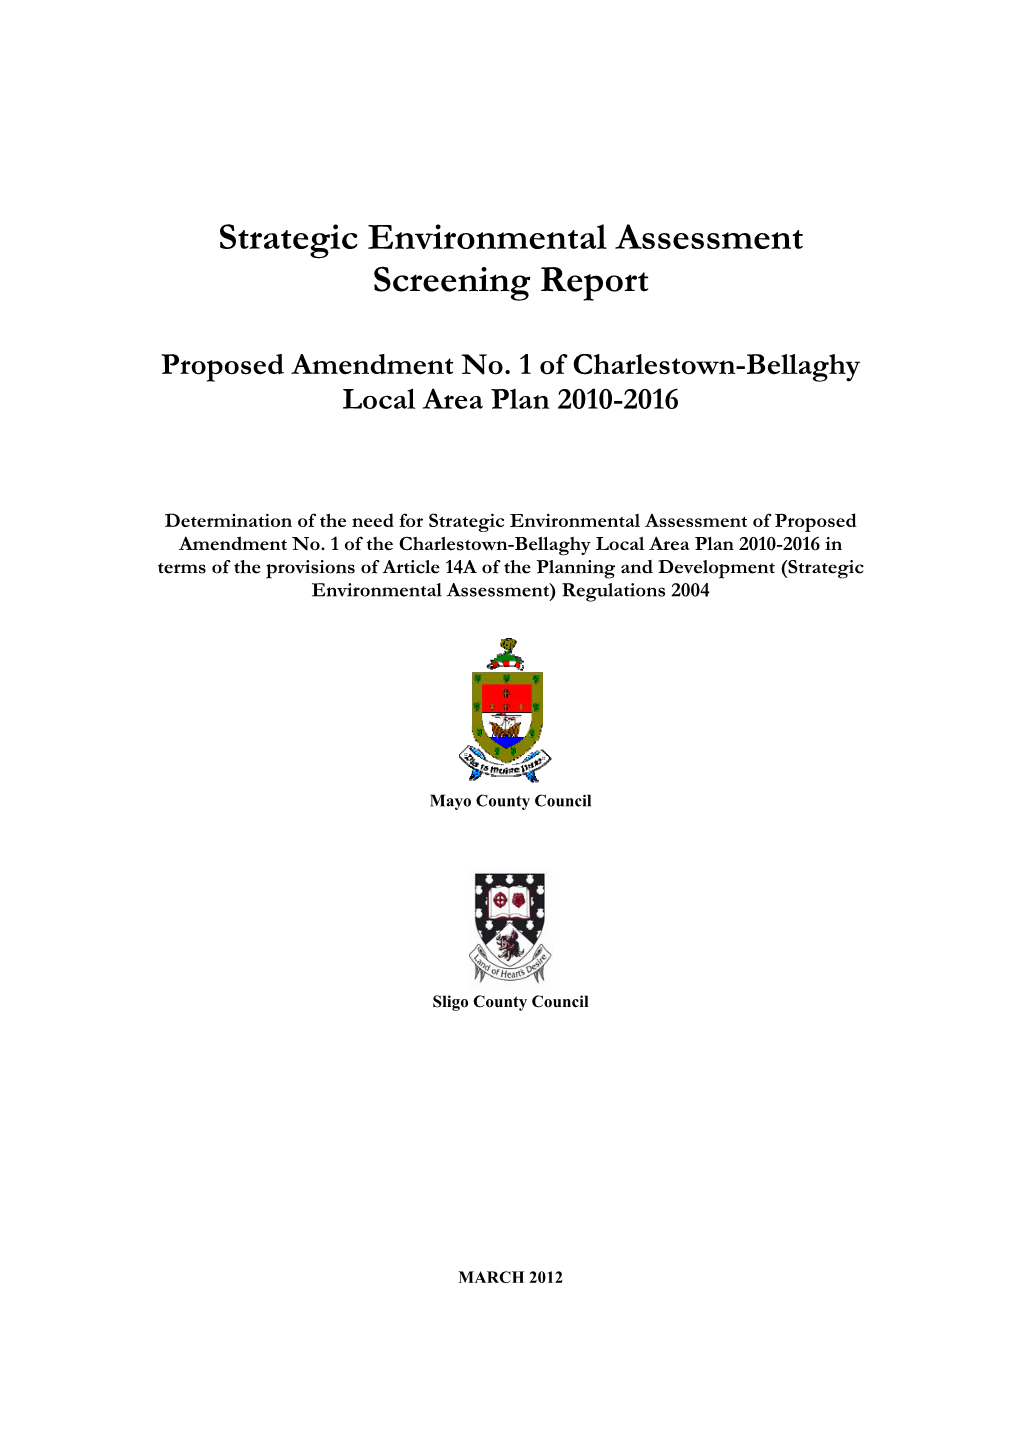 Strategic Environmental Assessment Screening Report